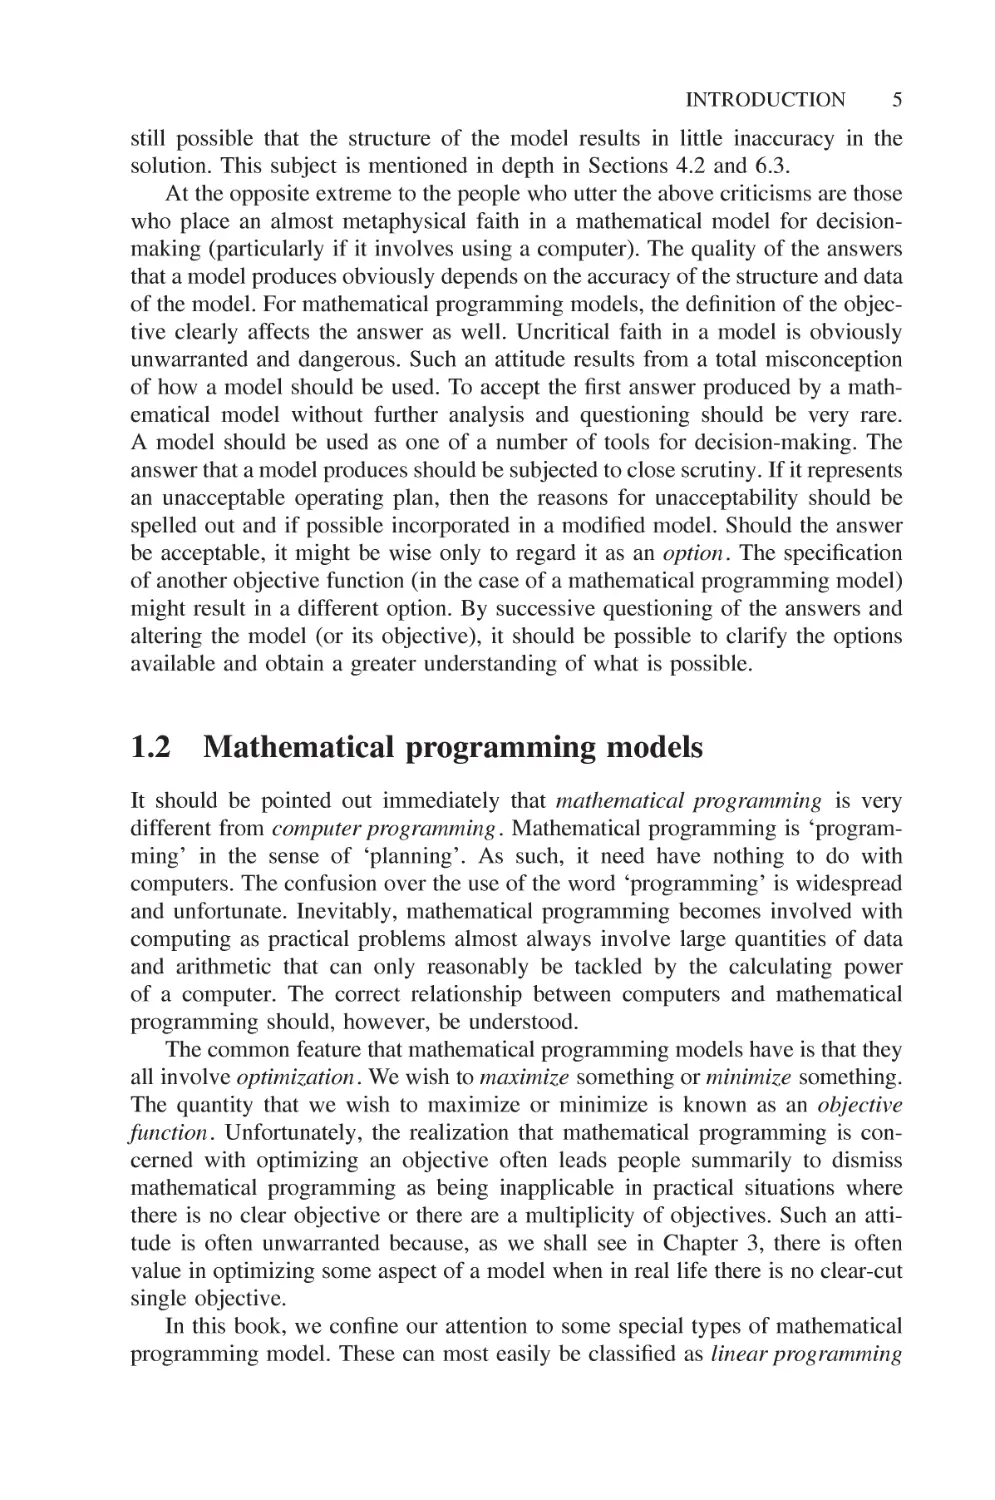 1.2 Mathematical programming models